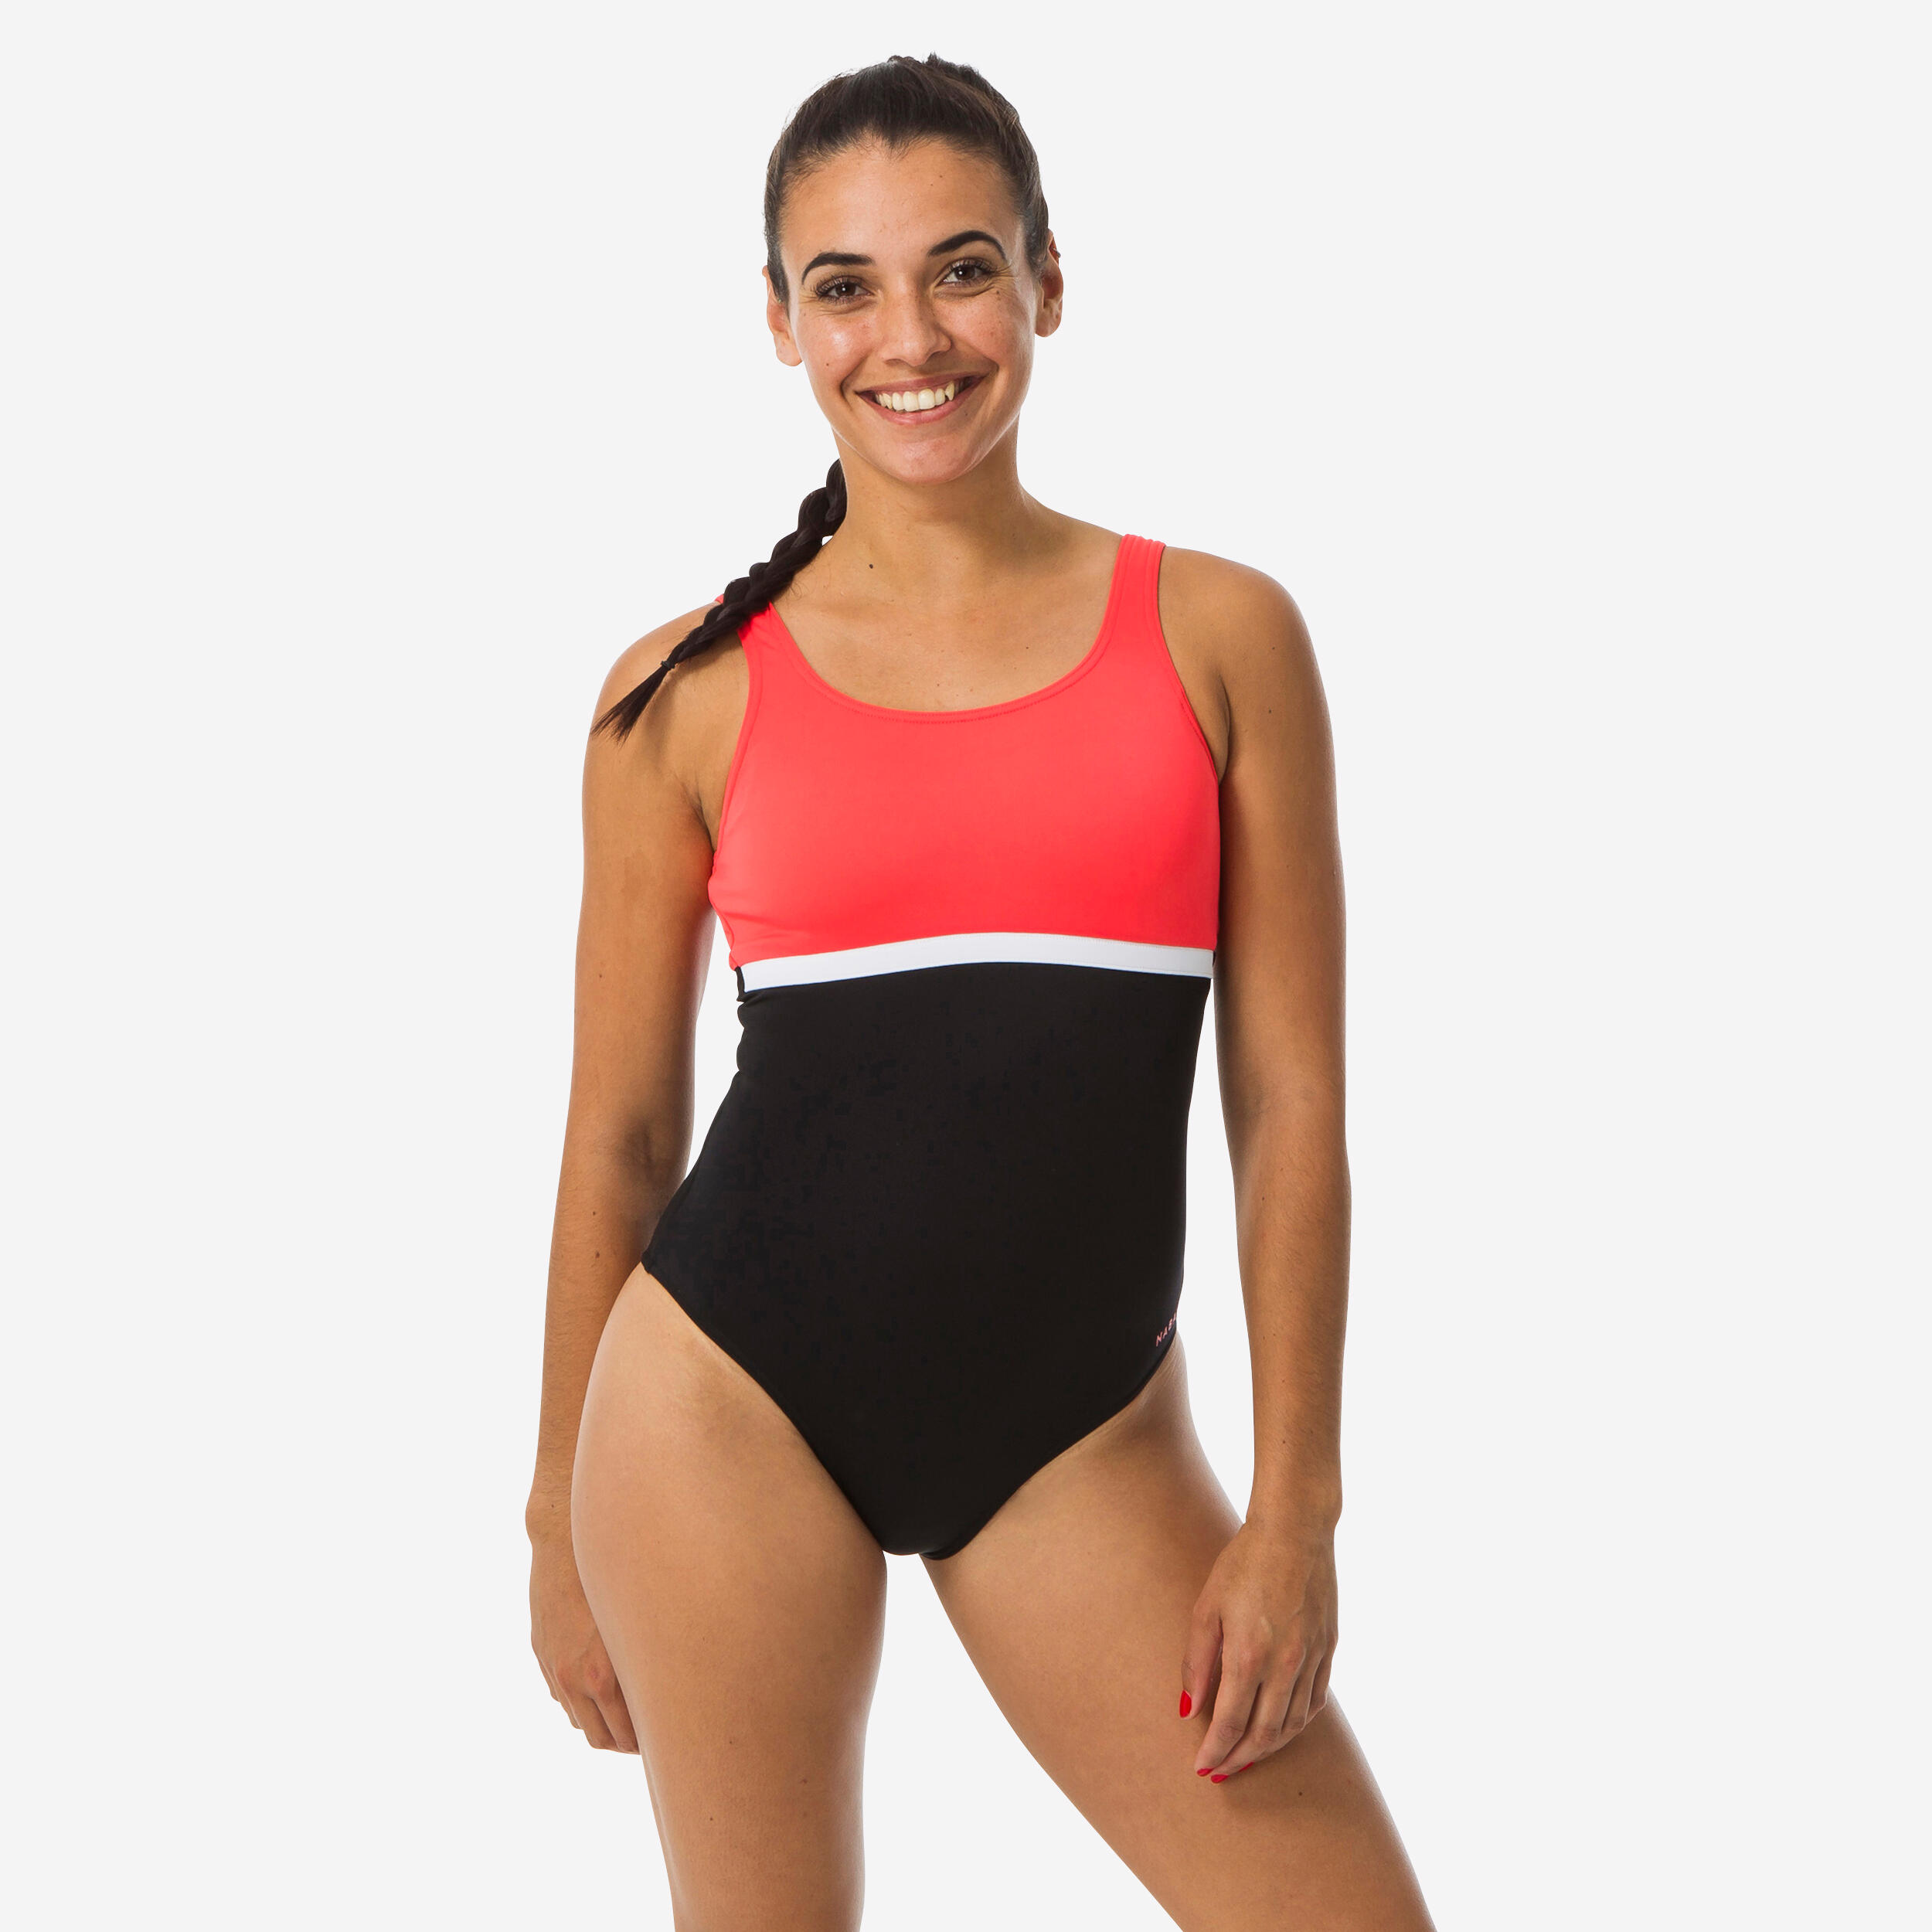 Women's Aquafitness 1-Piece Swimsuit - Karly Black - Black - Nabaiji -  Decathlon